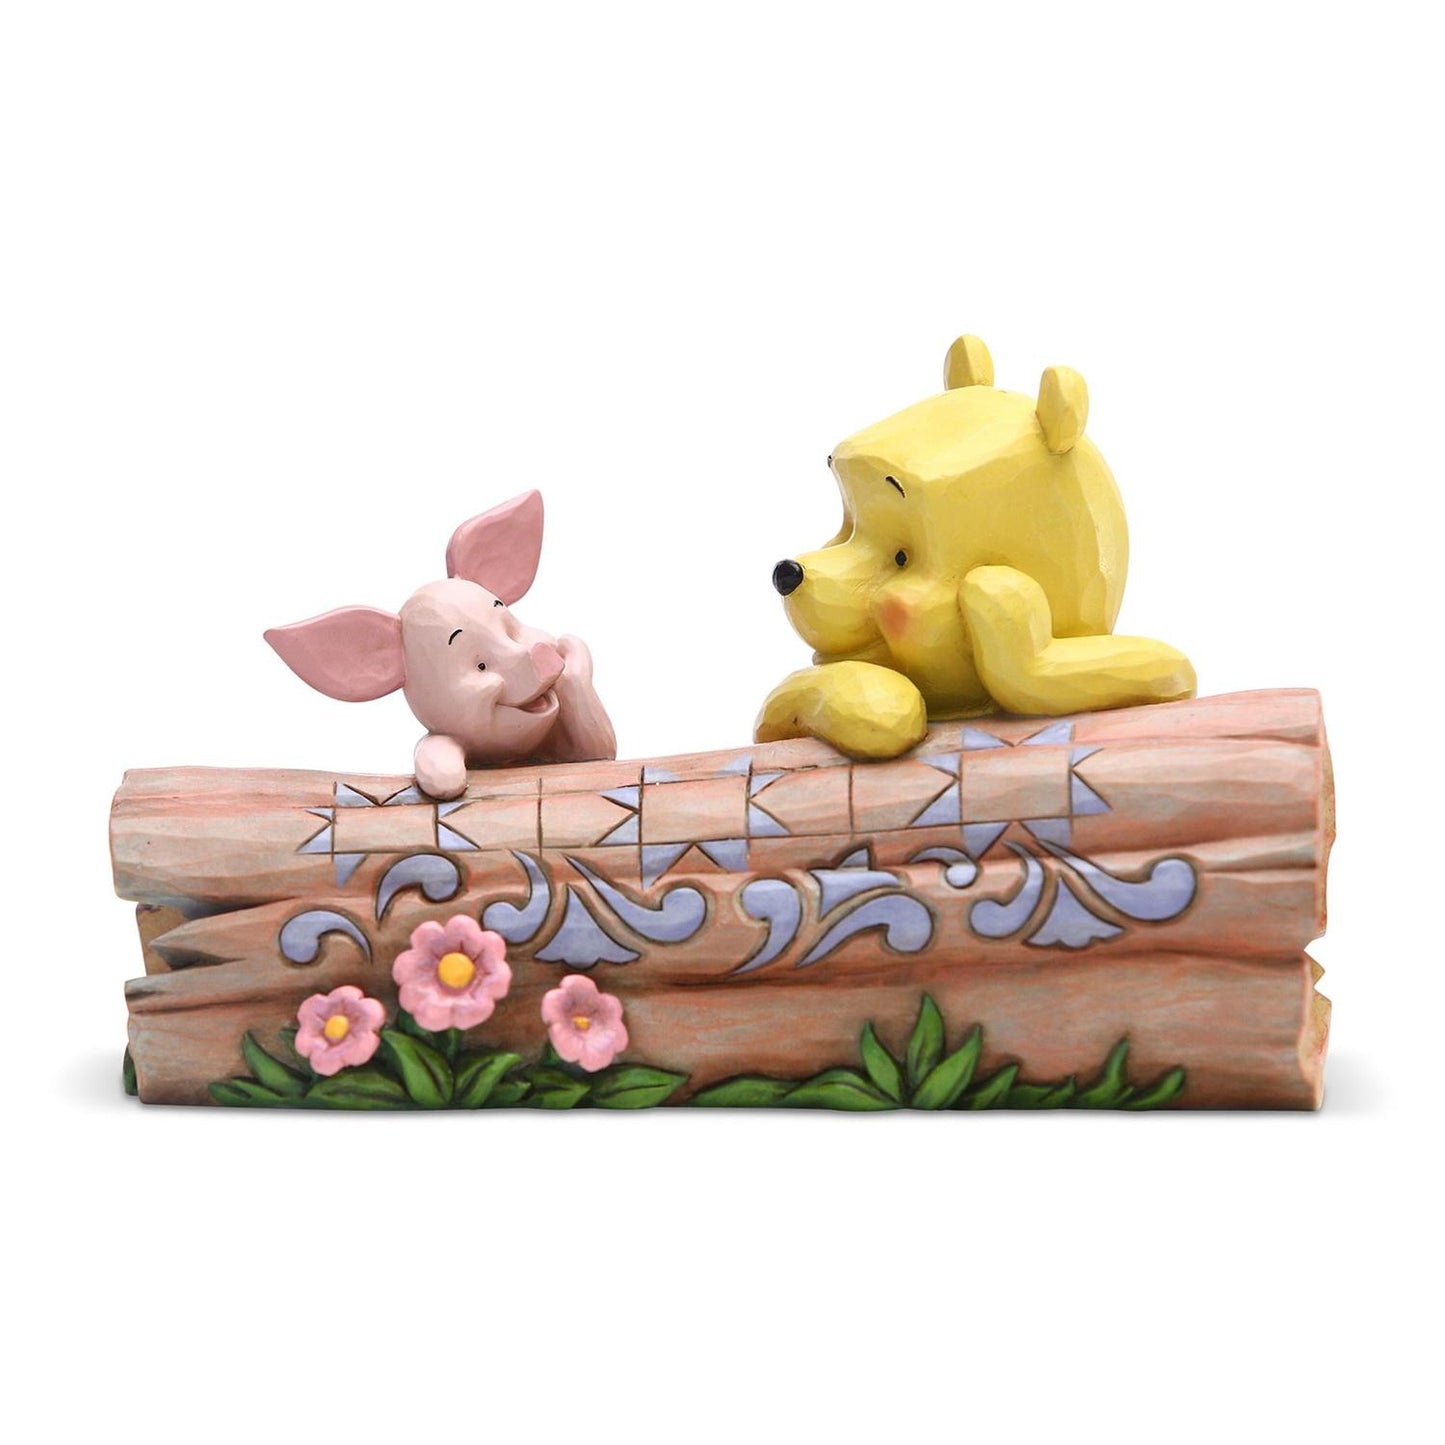 Disney Traditions, “Truncated Conversation”, Pooh & Piglet